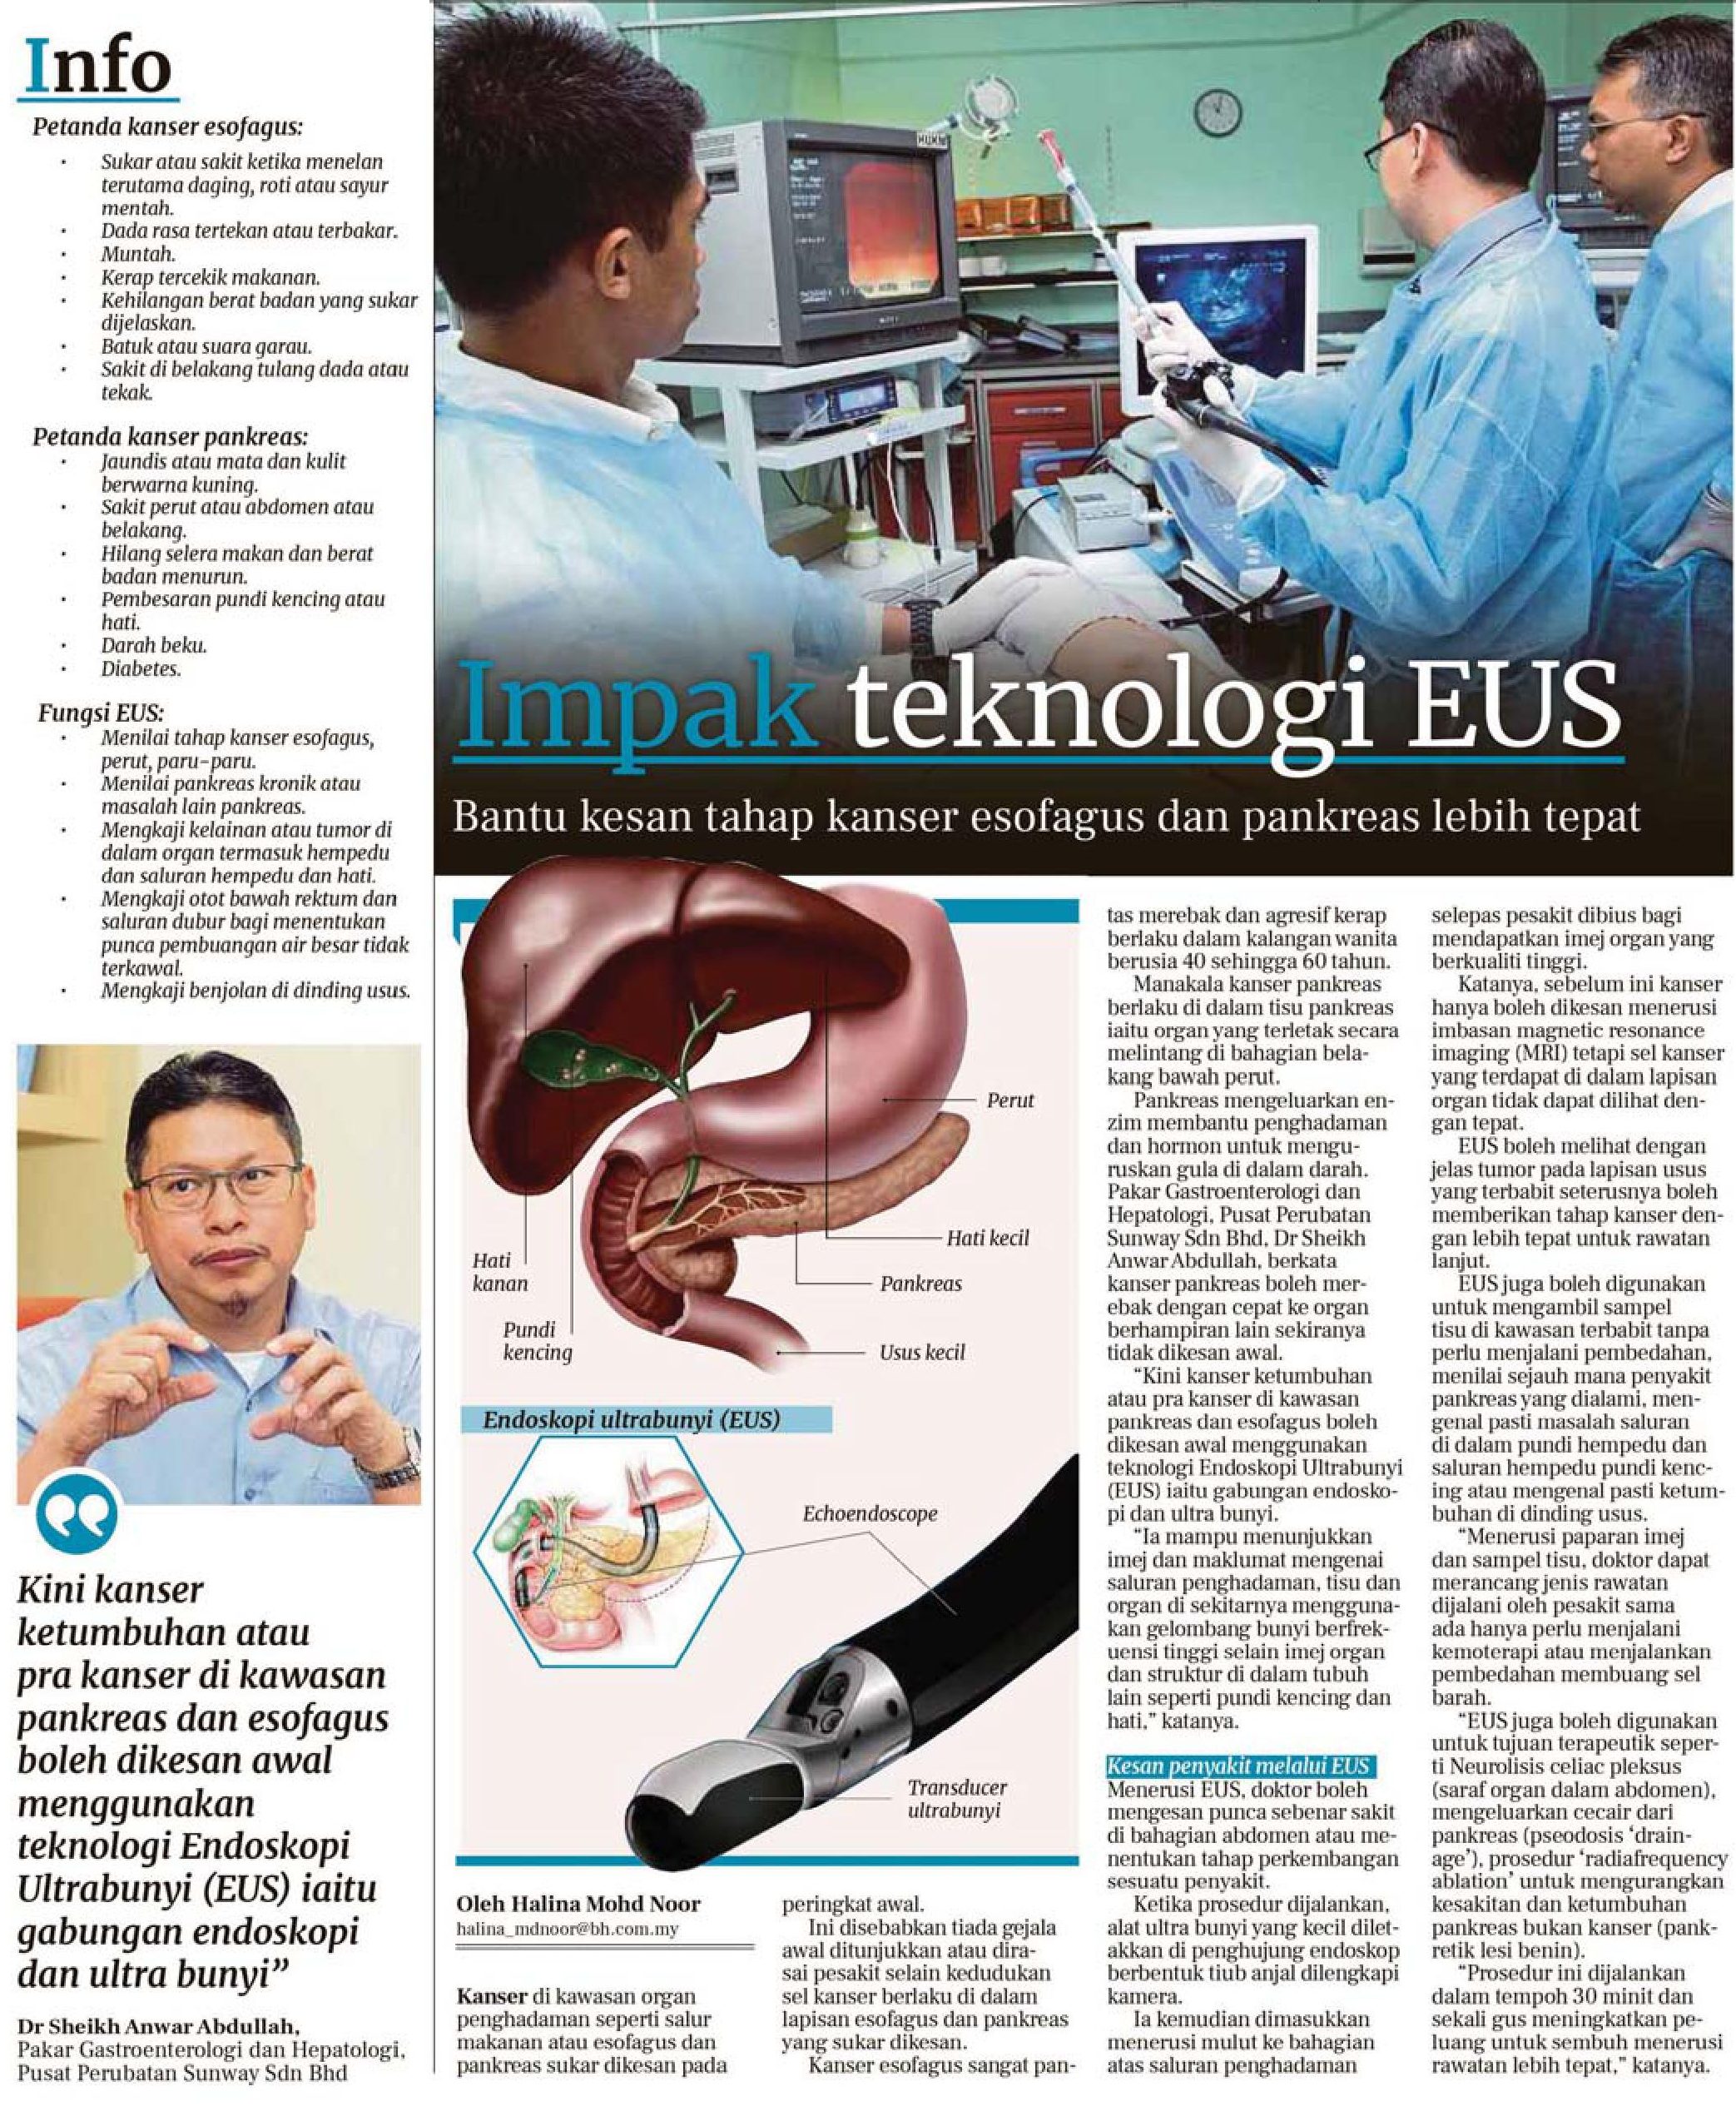 Cancer detection through EUS technology